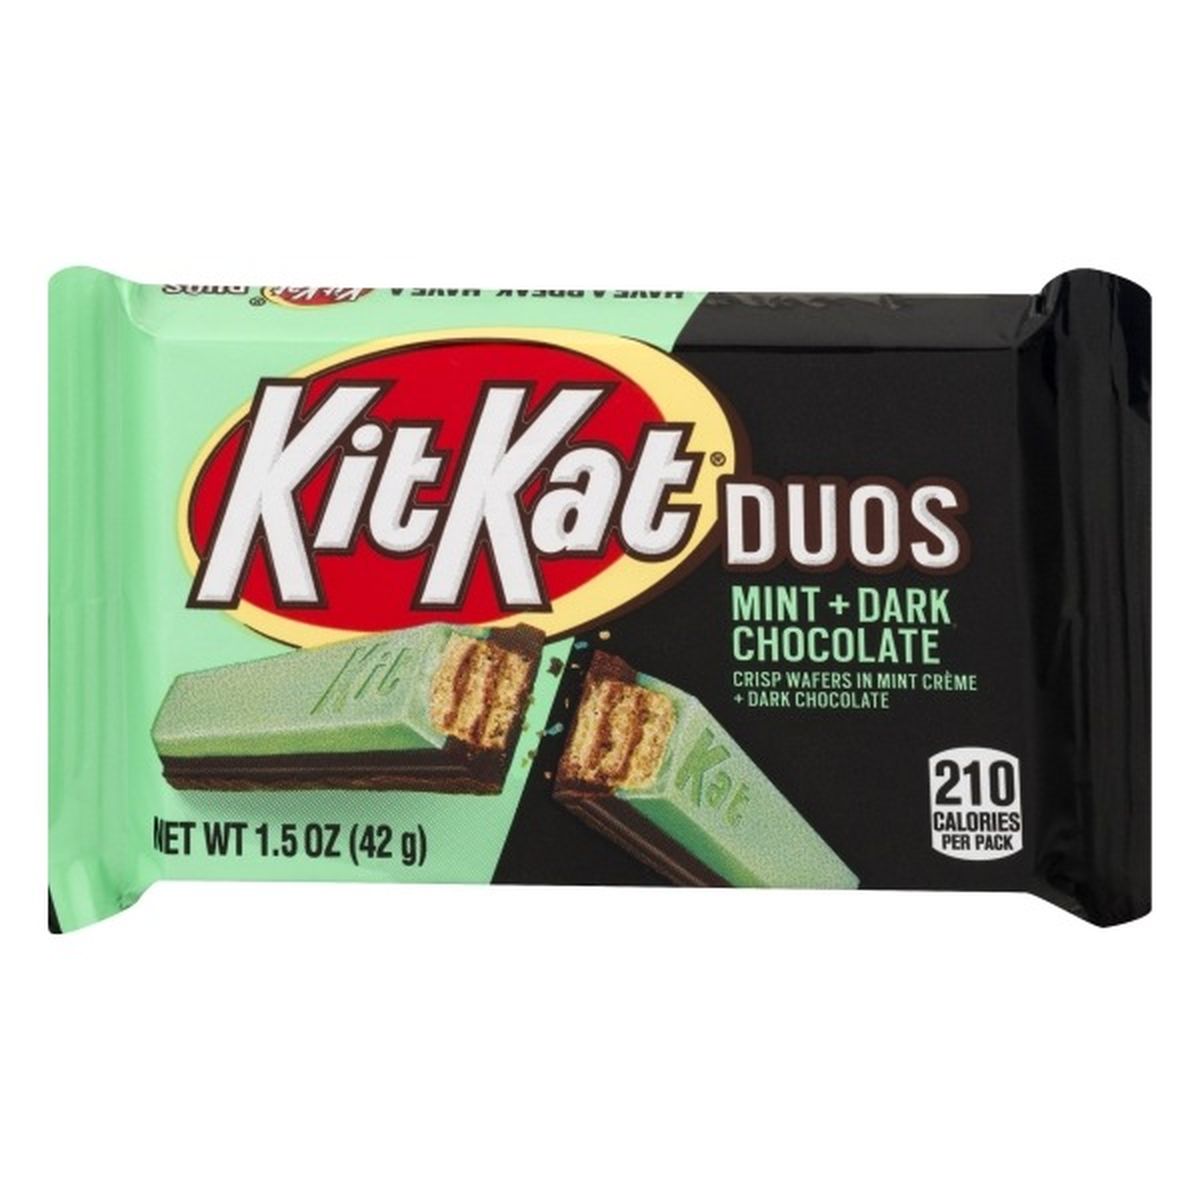 Calories in Kit Kat Chocolate, Mint + Dark, Duos